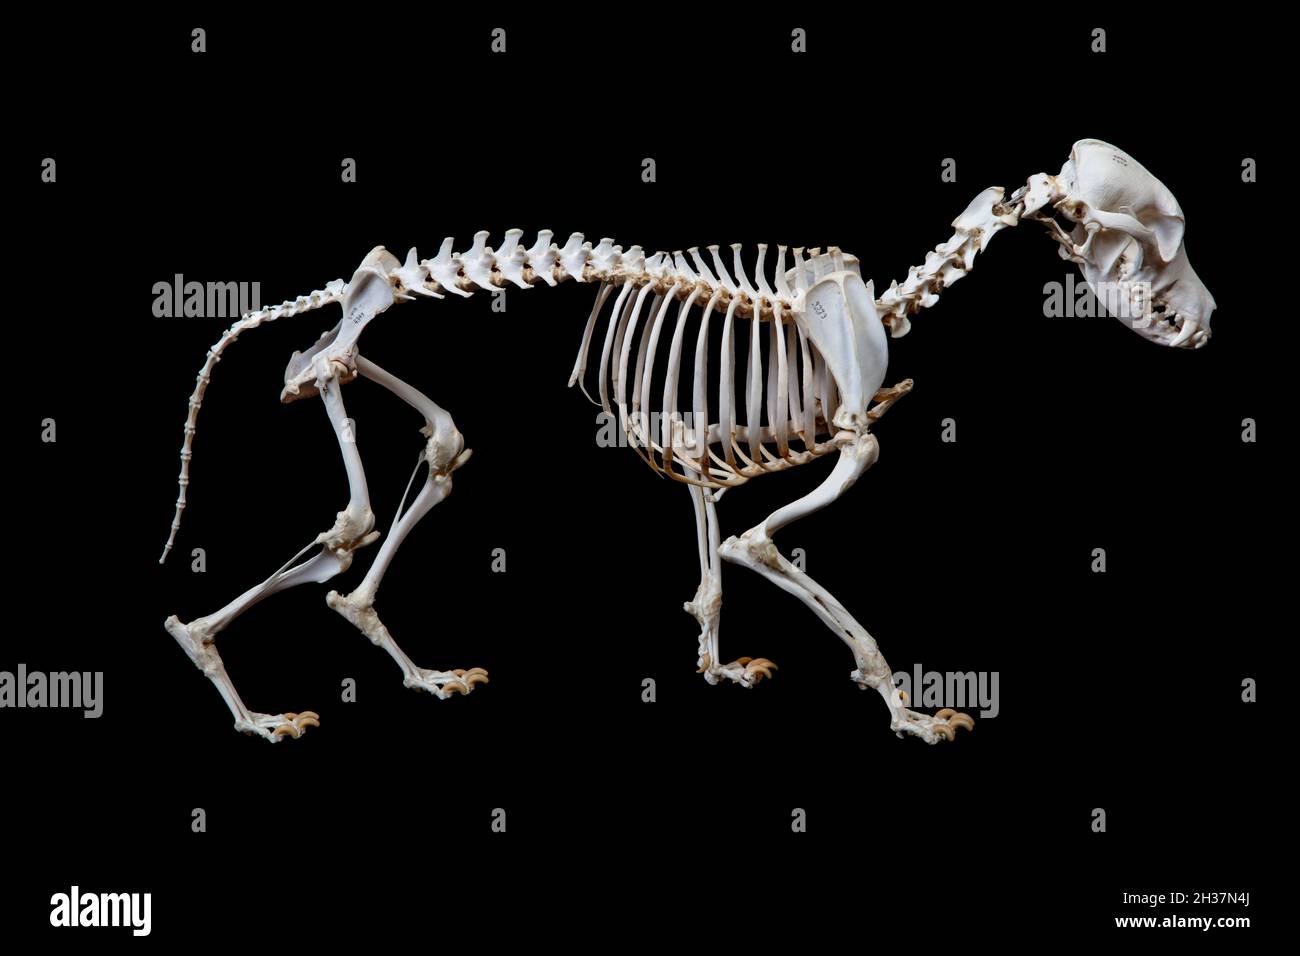 Dog Skeleton, Canis familiaris or Canis lupus familiaris Stock Photo